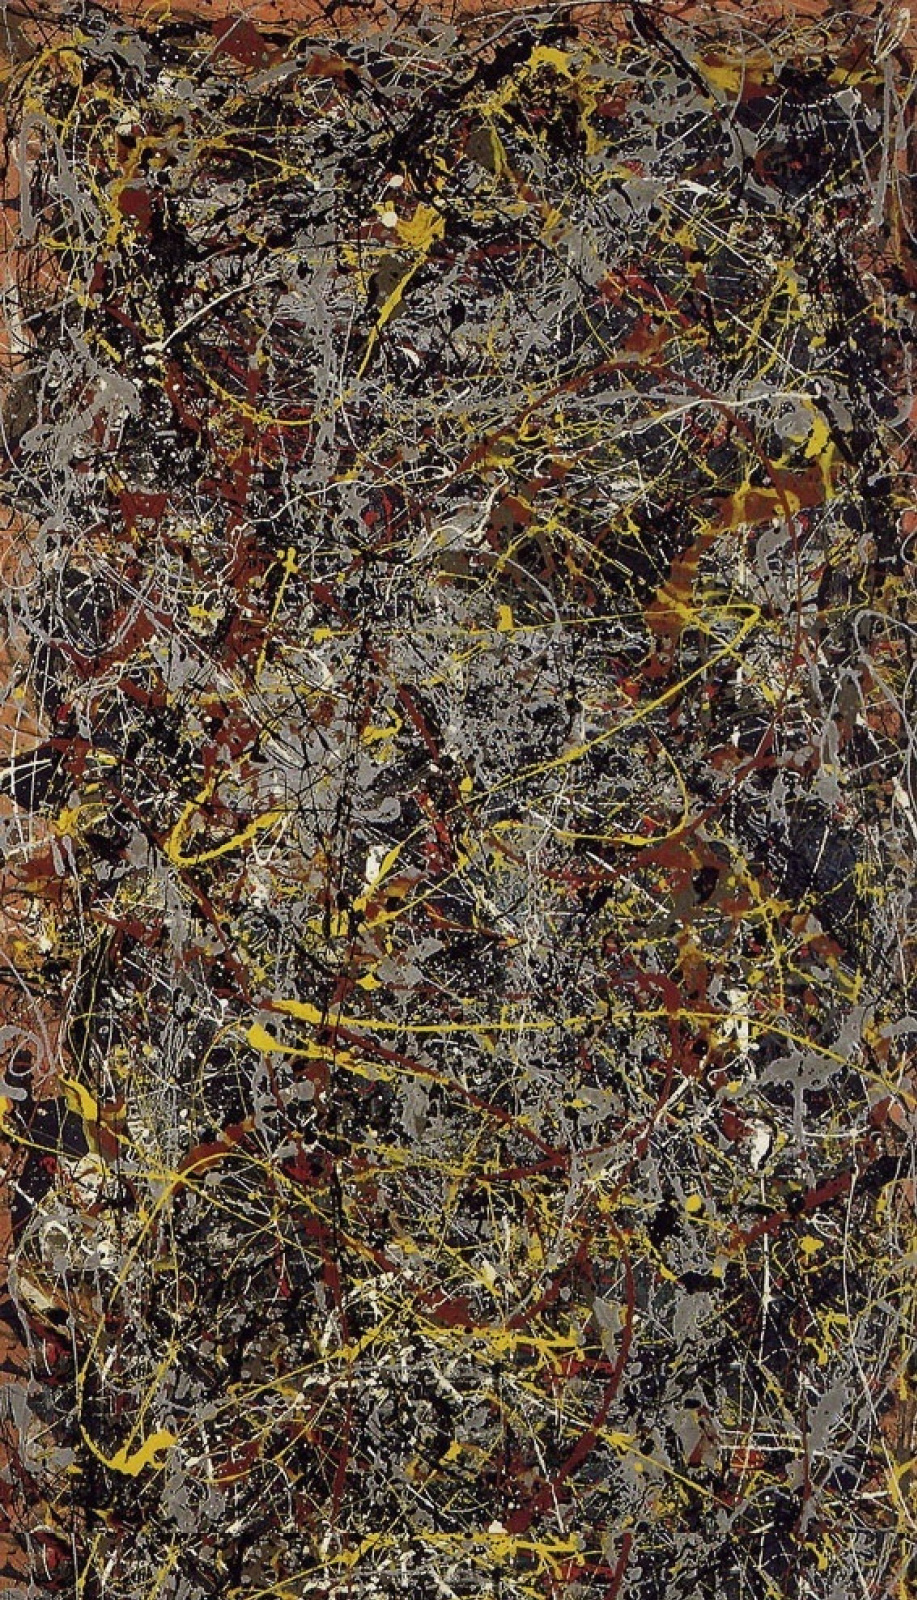 Jackson Pollock. Number 5